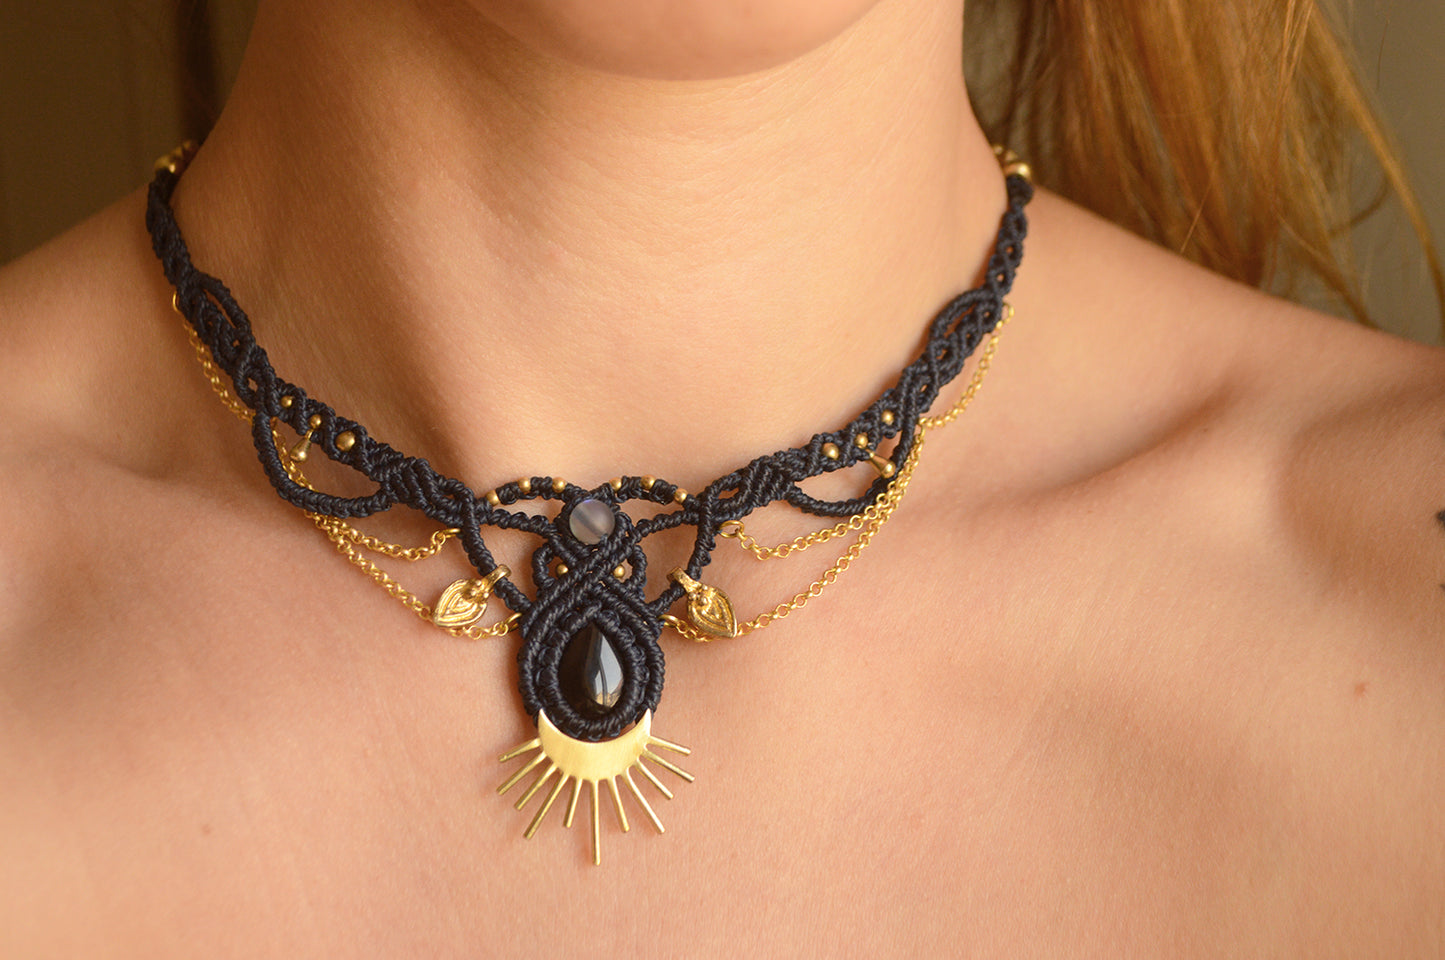 Macrame sun and moon black onyx necklace or tiara